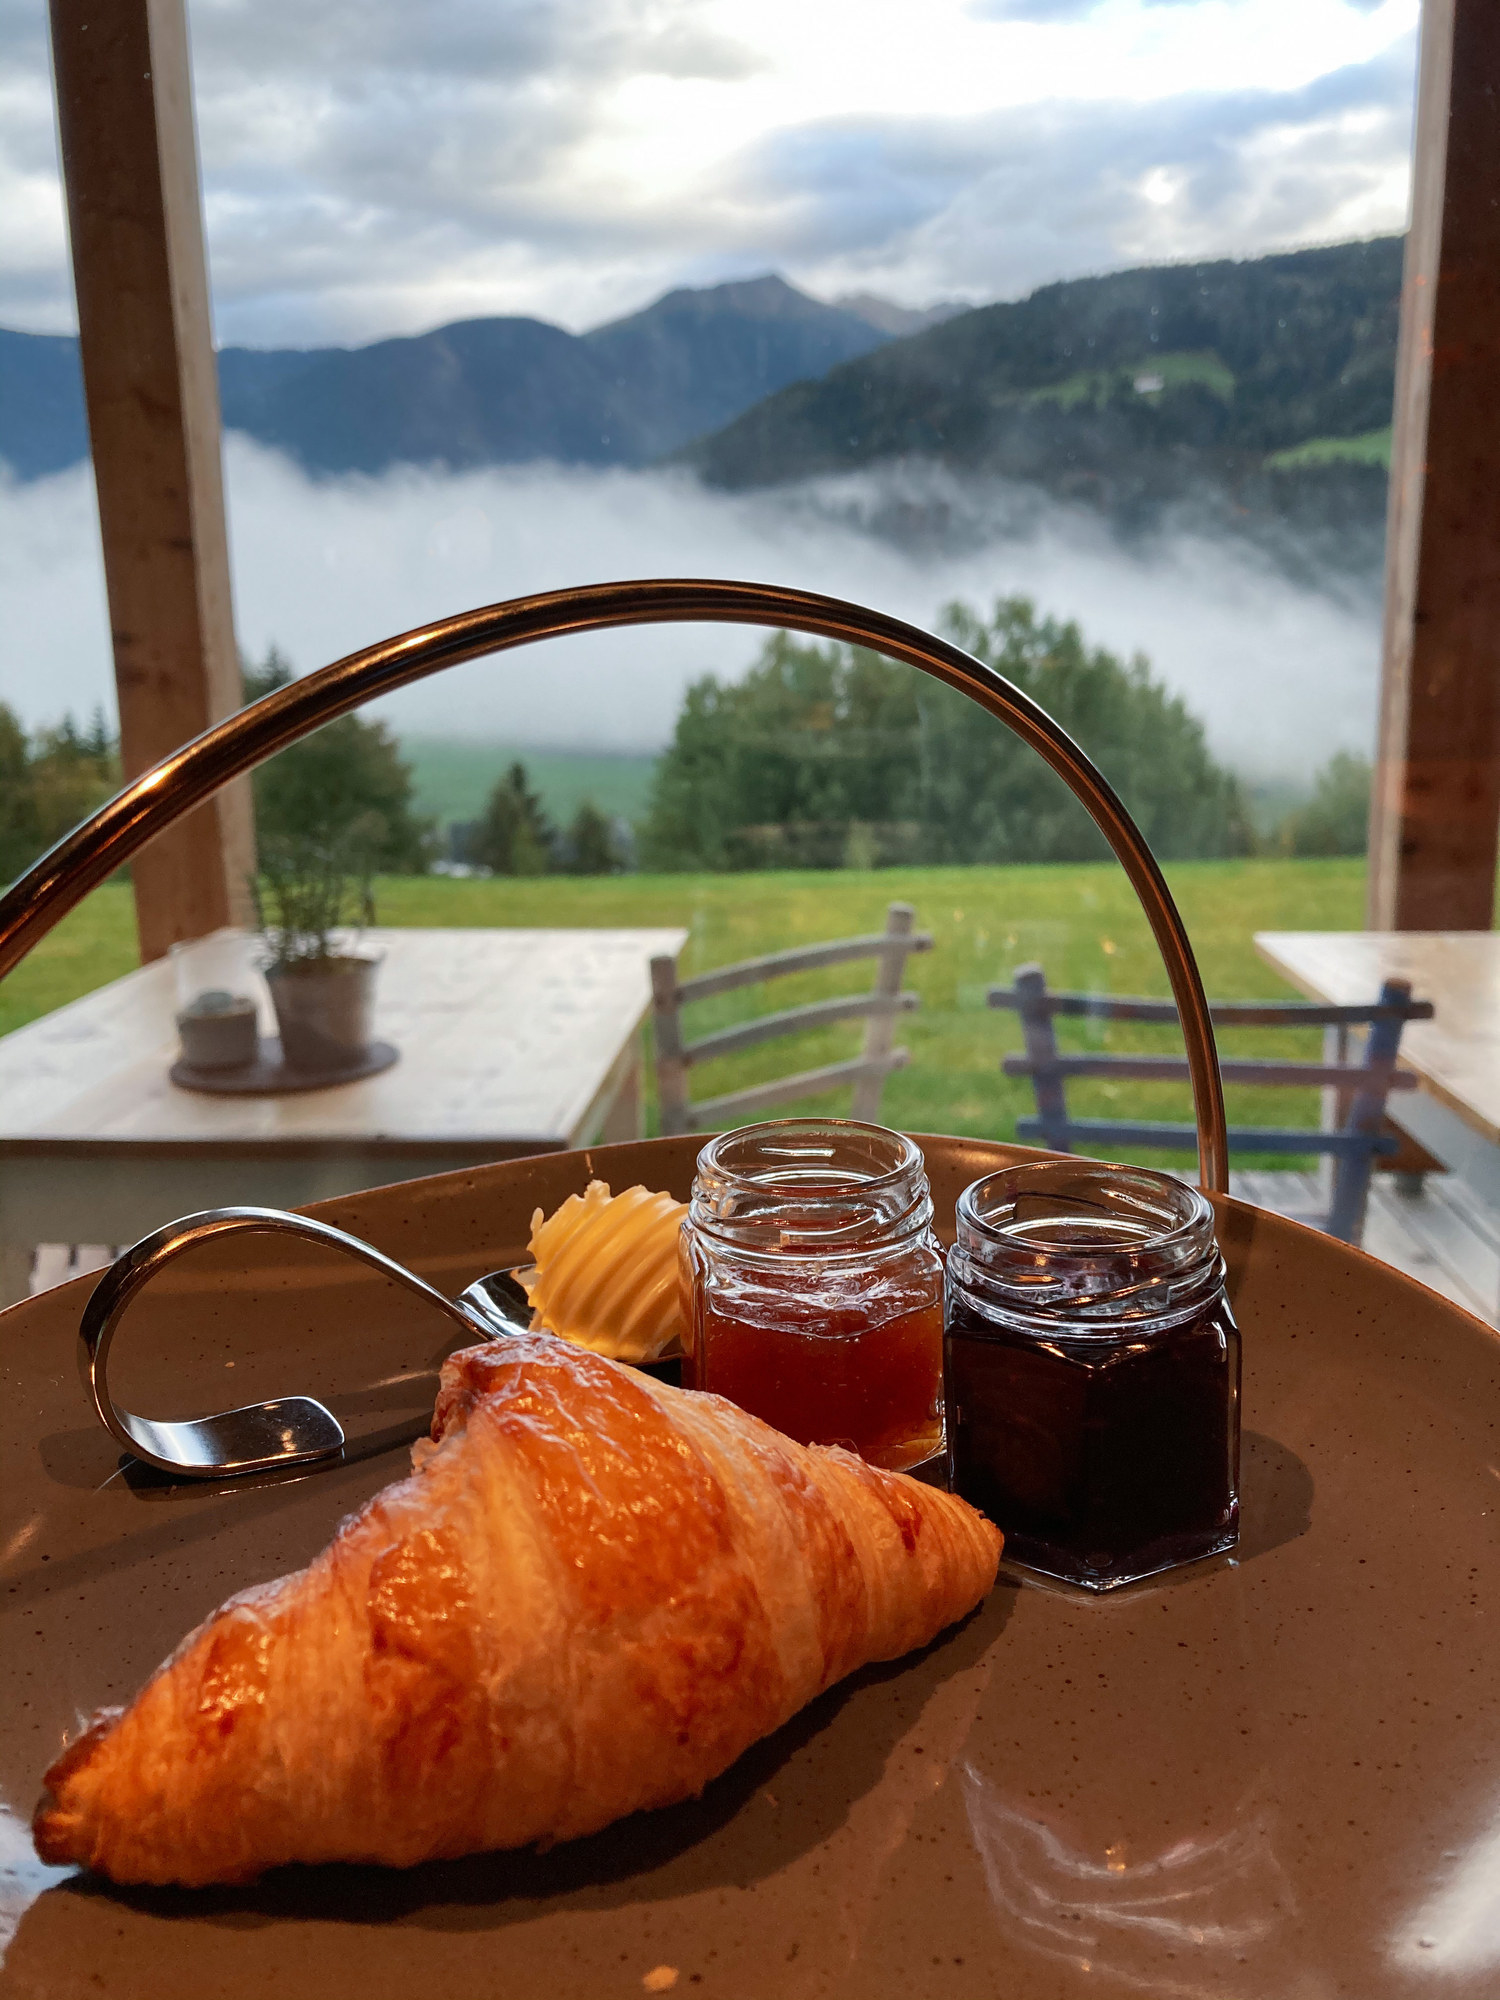 Breakfast views in South Tyrol, Italy.